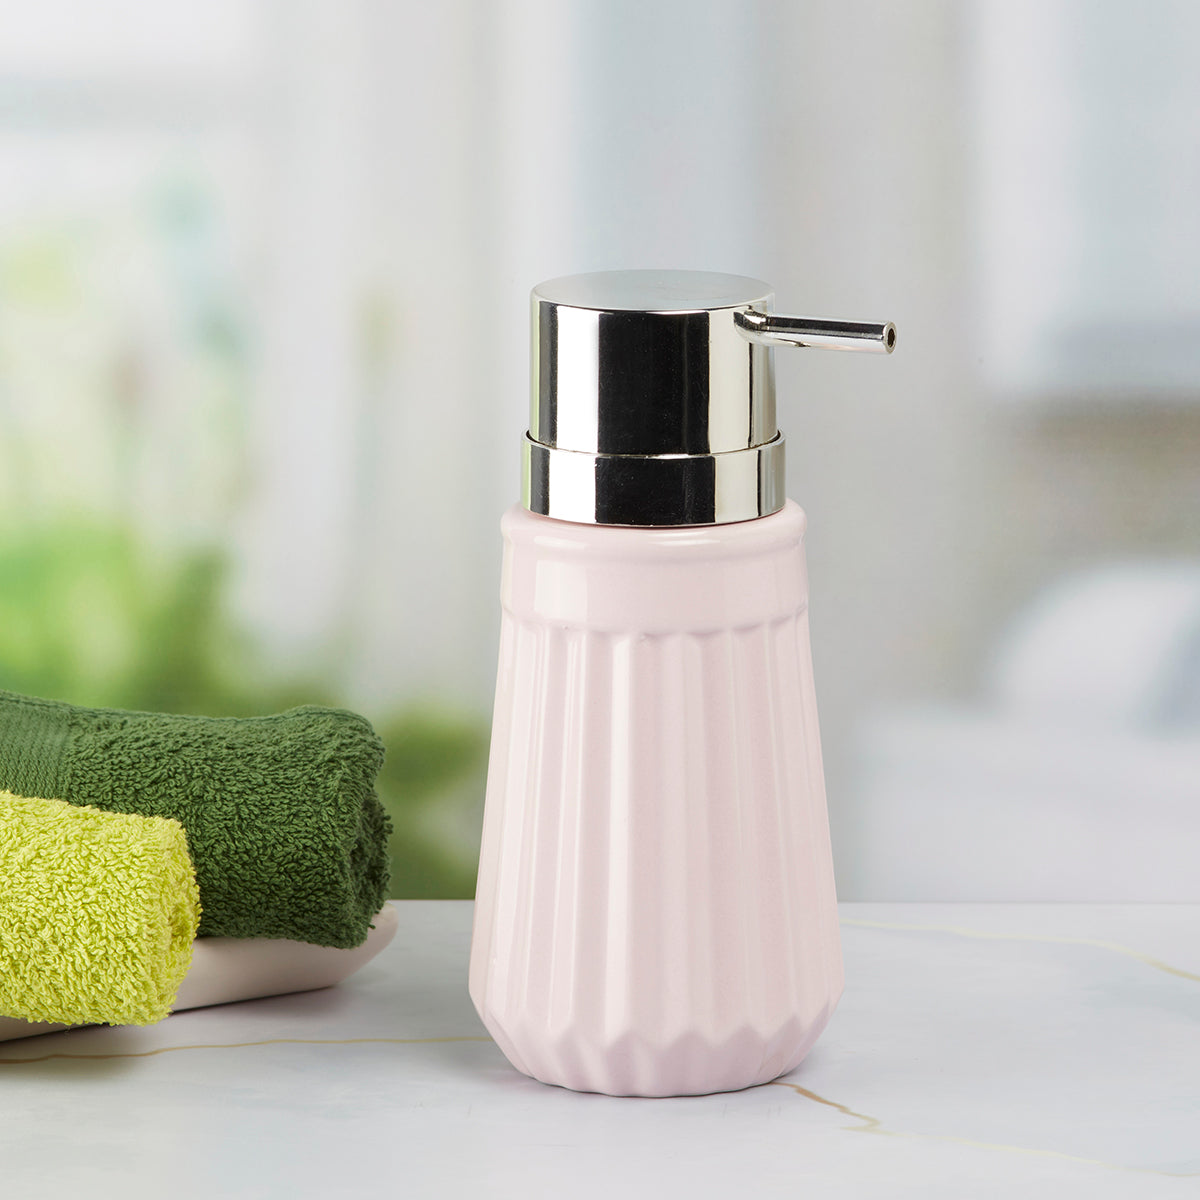 Ceramic Soap Dispenser handwash Pump for Bathroom, Set of 1, Pink (7982)